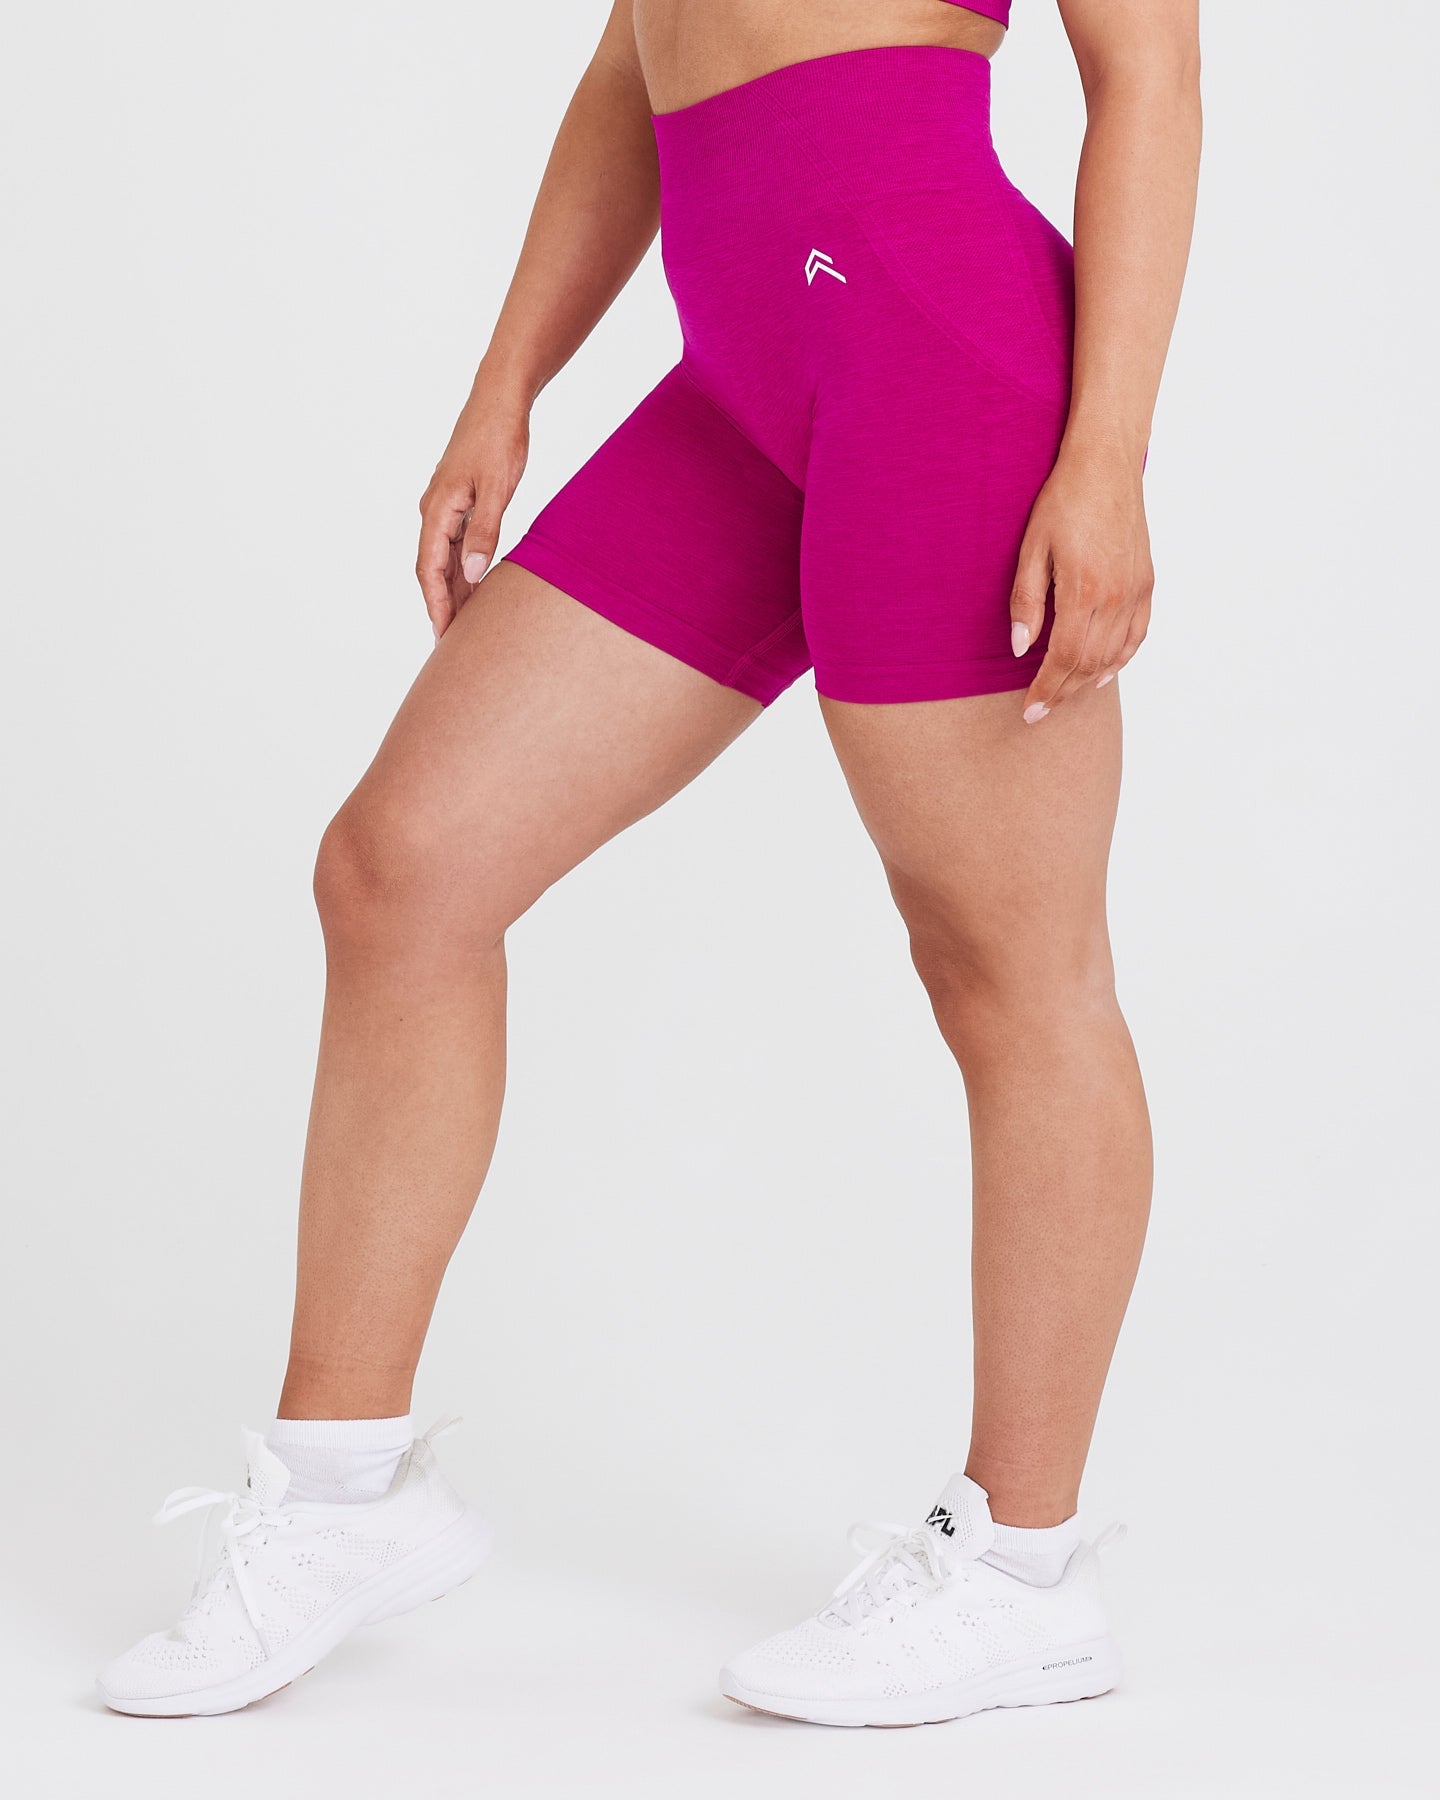 Pink High Waisted Shorts - Women\'s - Fuchsia | Oner Active US